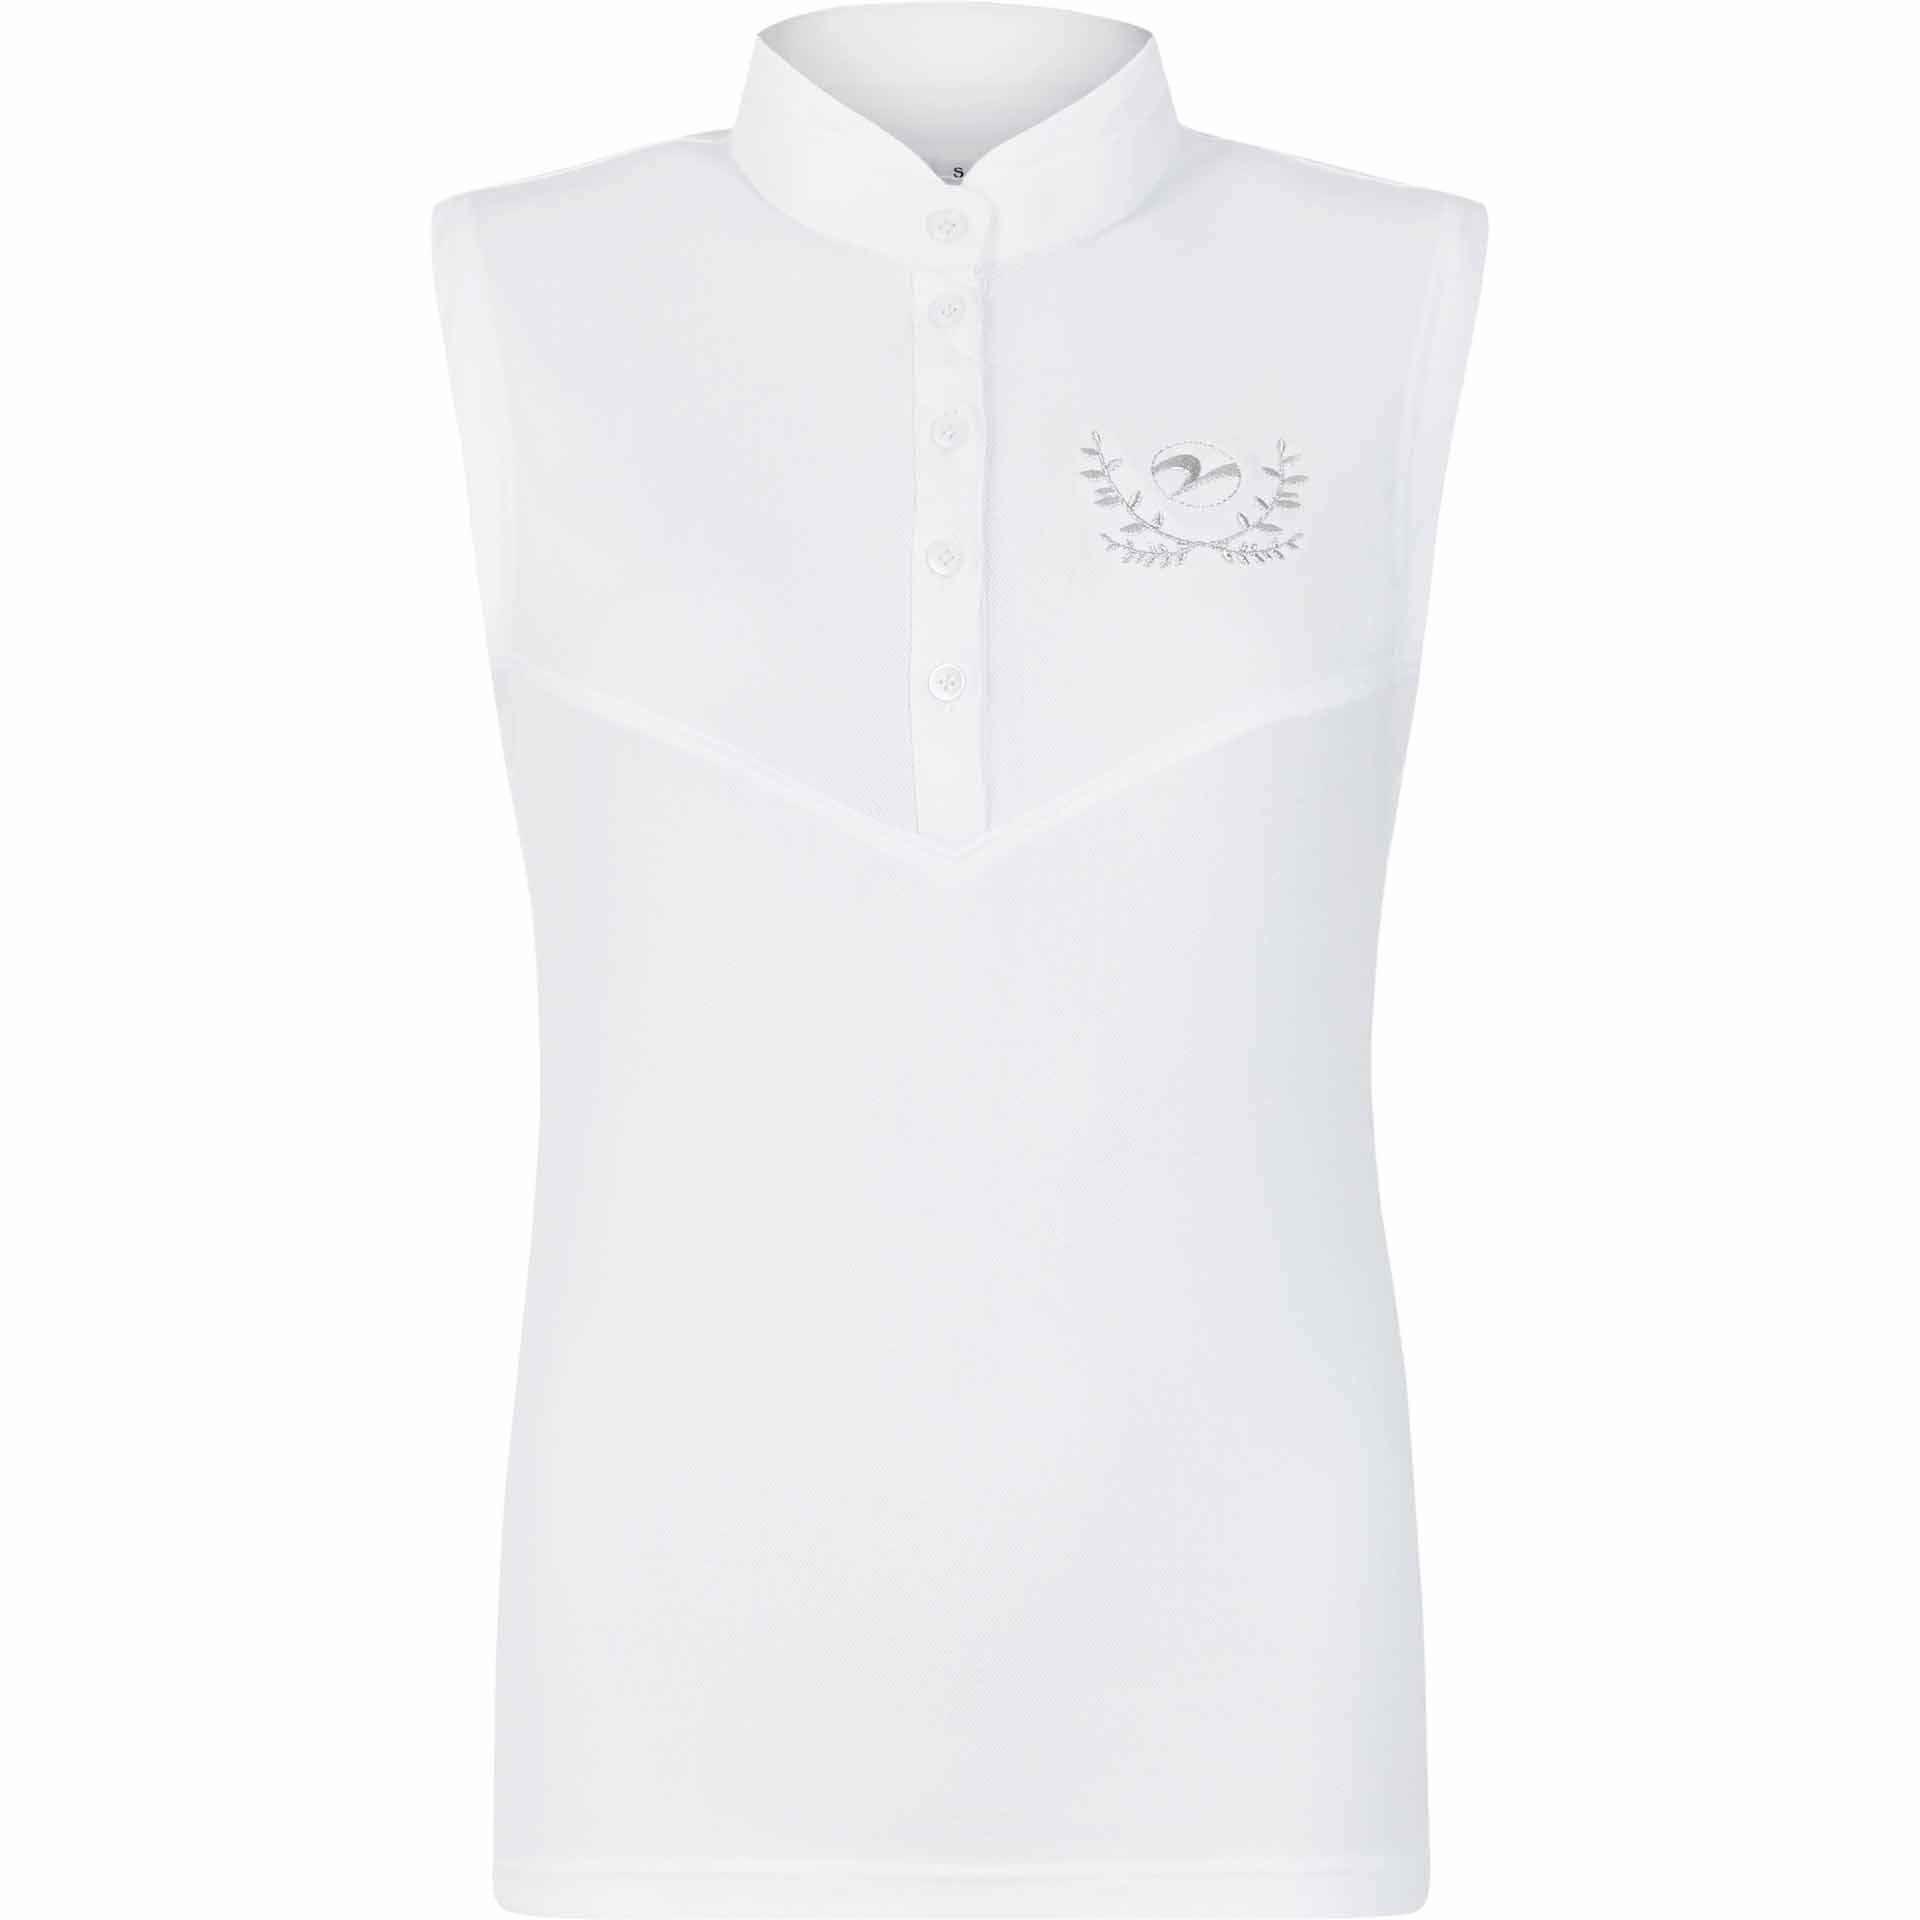 BUSSE Turnier-Shirt CLUNY, ärmellos L navy/weiß